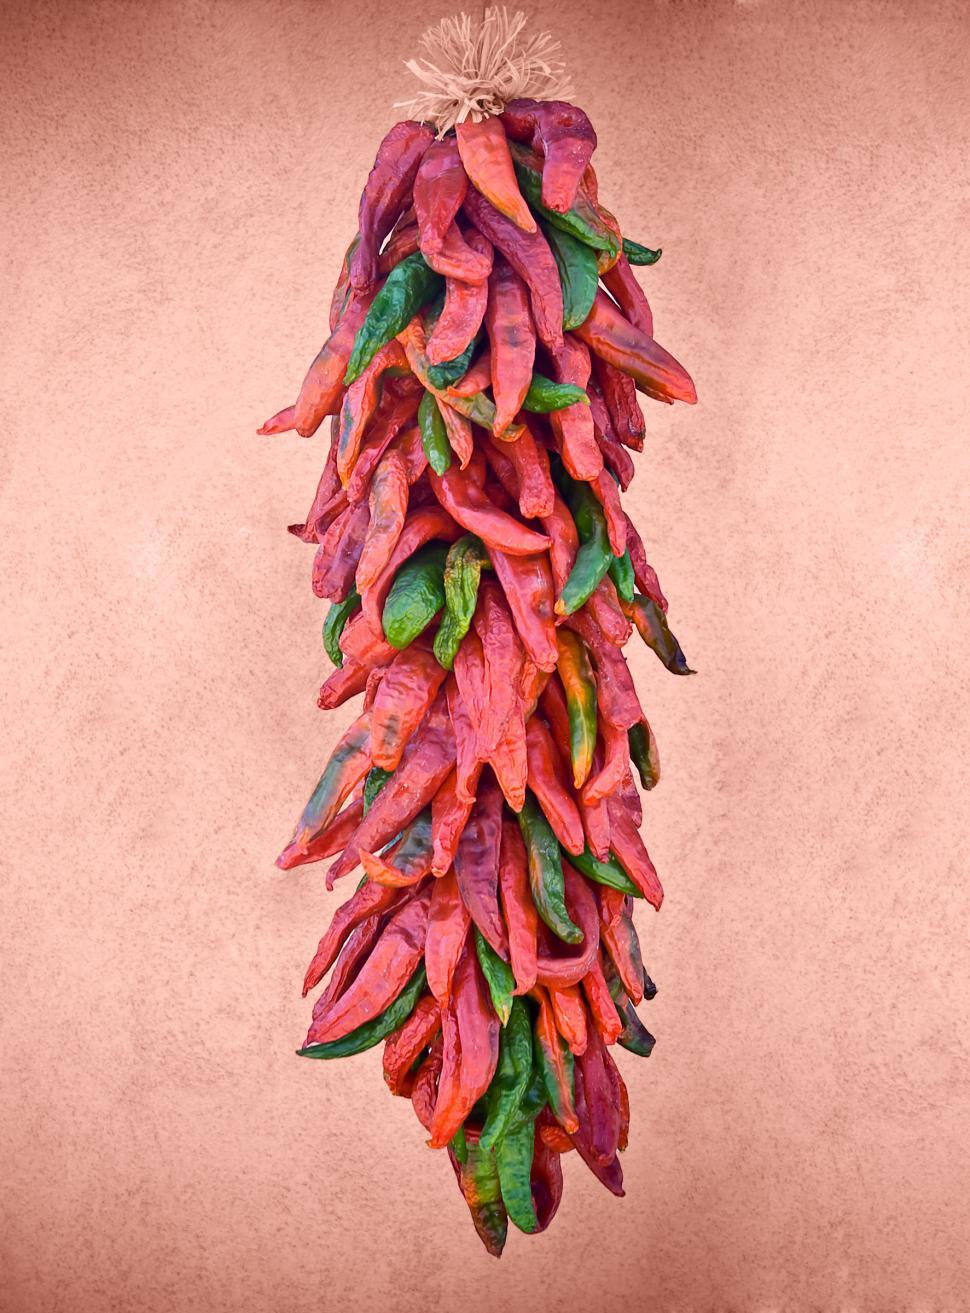 Download Free Stock Photo of Hanging Chilis 